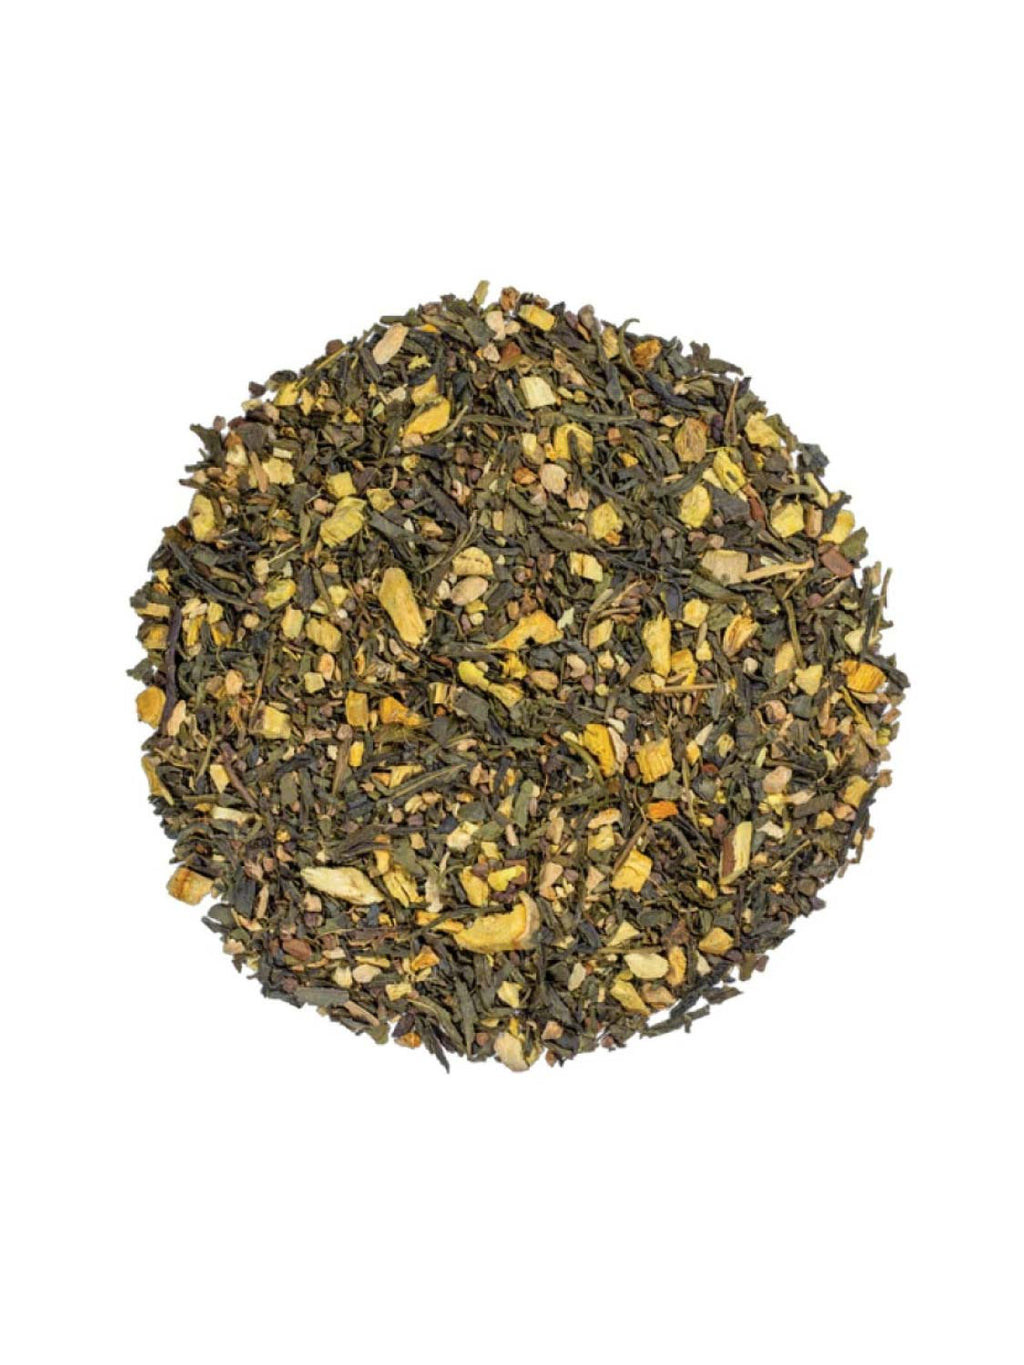 Kusmi Tea Detox - 3.5 oz Loose Tea Tin - Organic Blend of Green Tea, Mate &  Lemon - Enjoy Hot or Iced